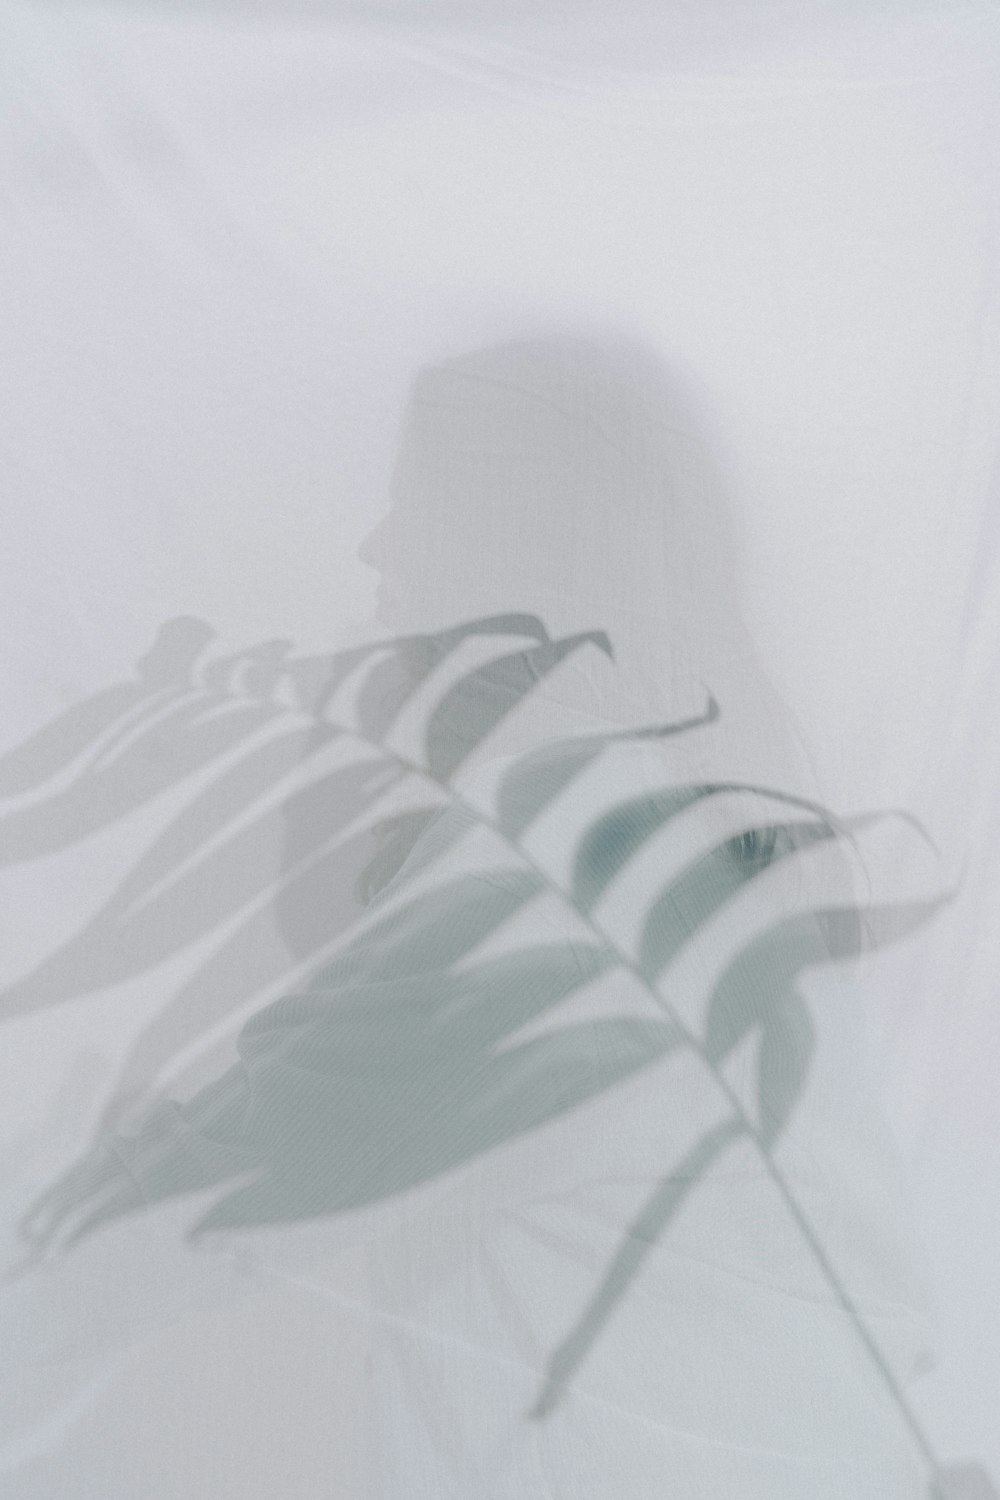 a shadow of a palm leaf on a white sheet